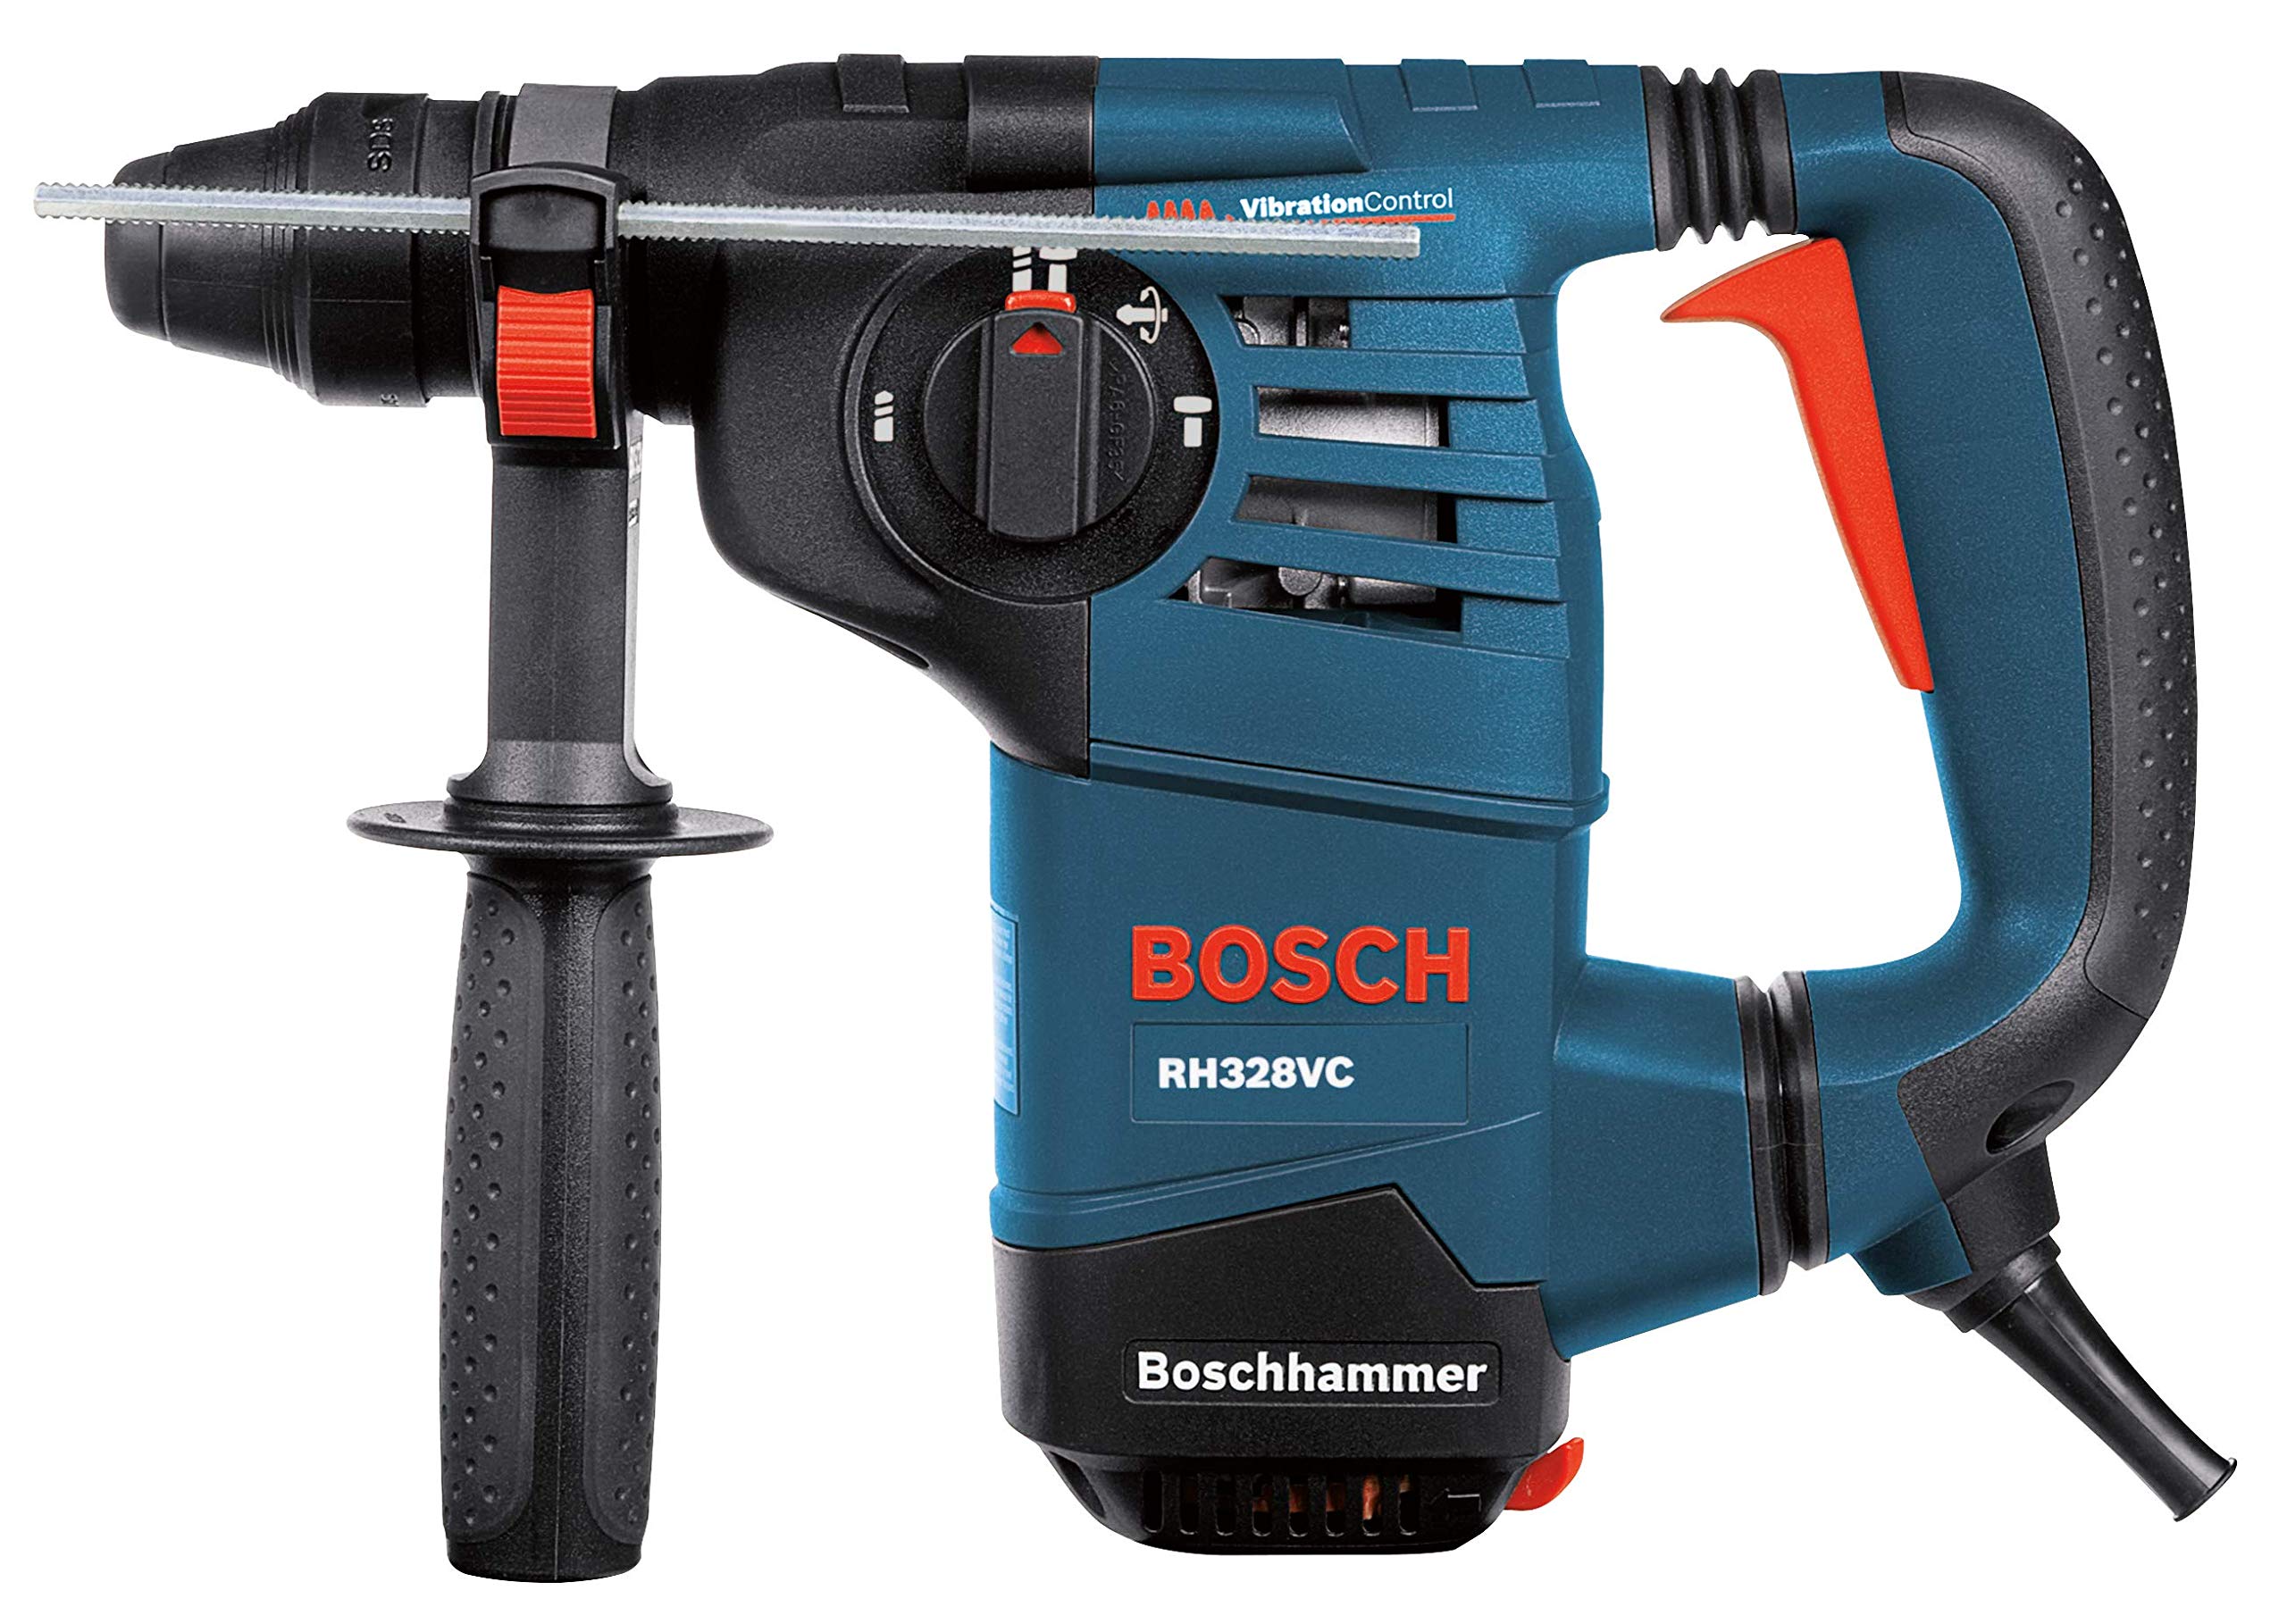 BOSCH 1-1/8-Inch SDS Rotary Hammer RH328VC with Vibration Control, Bosch Blue